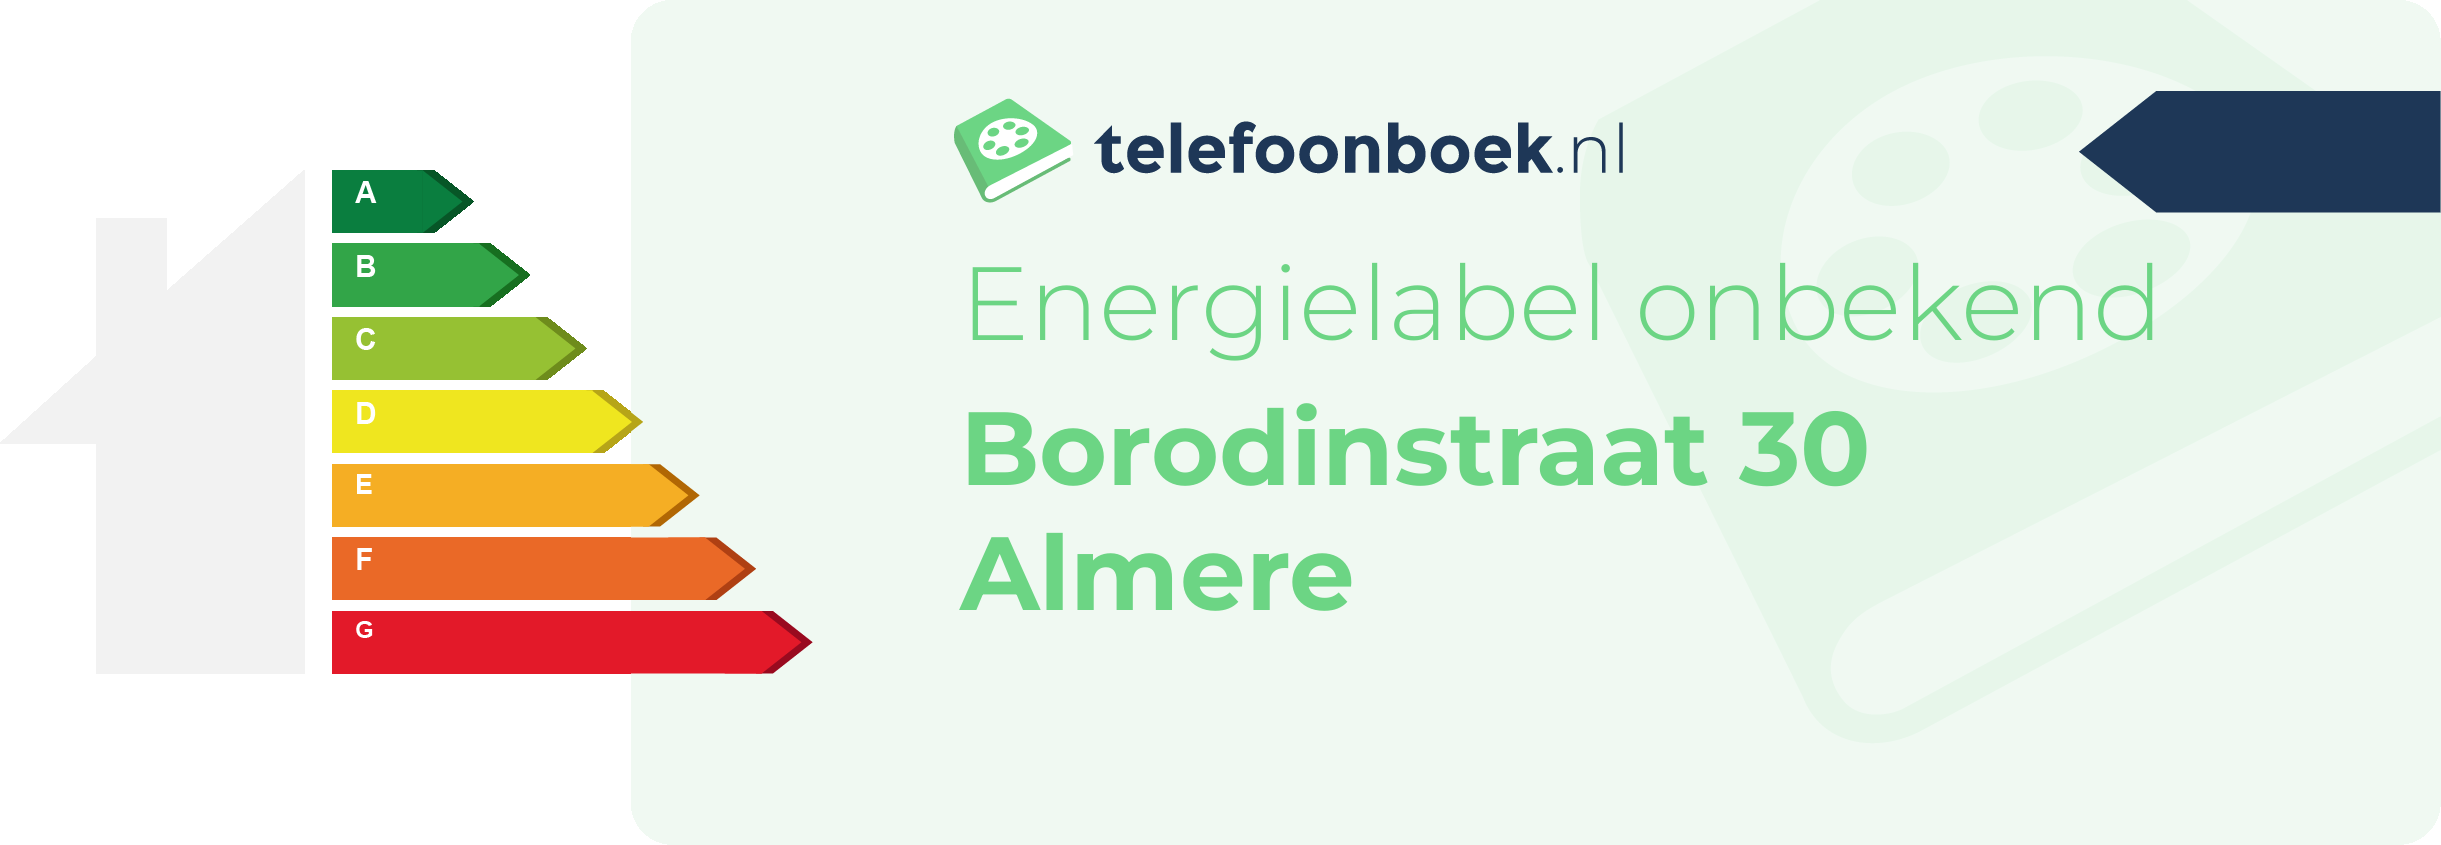 Energielabel Borodinstraat 30 Almere